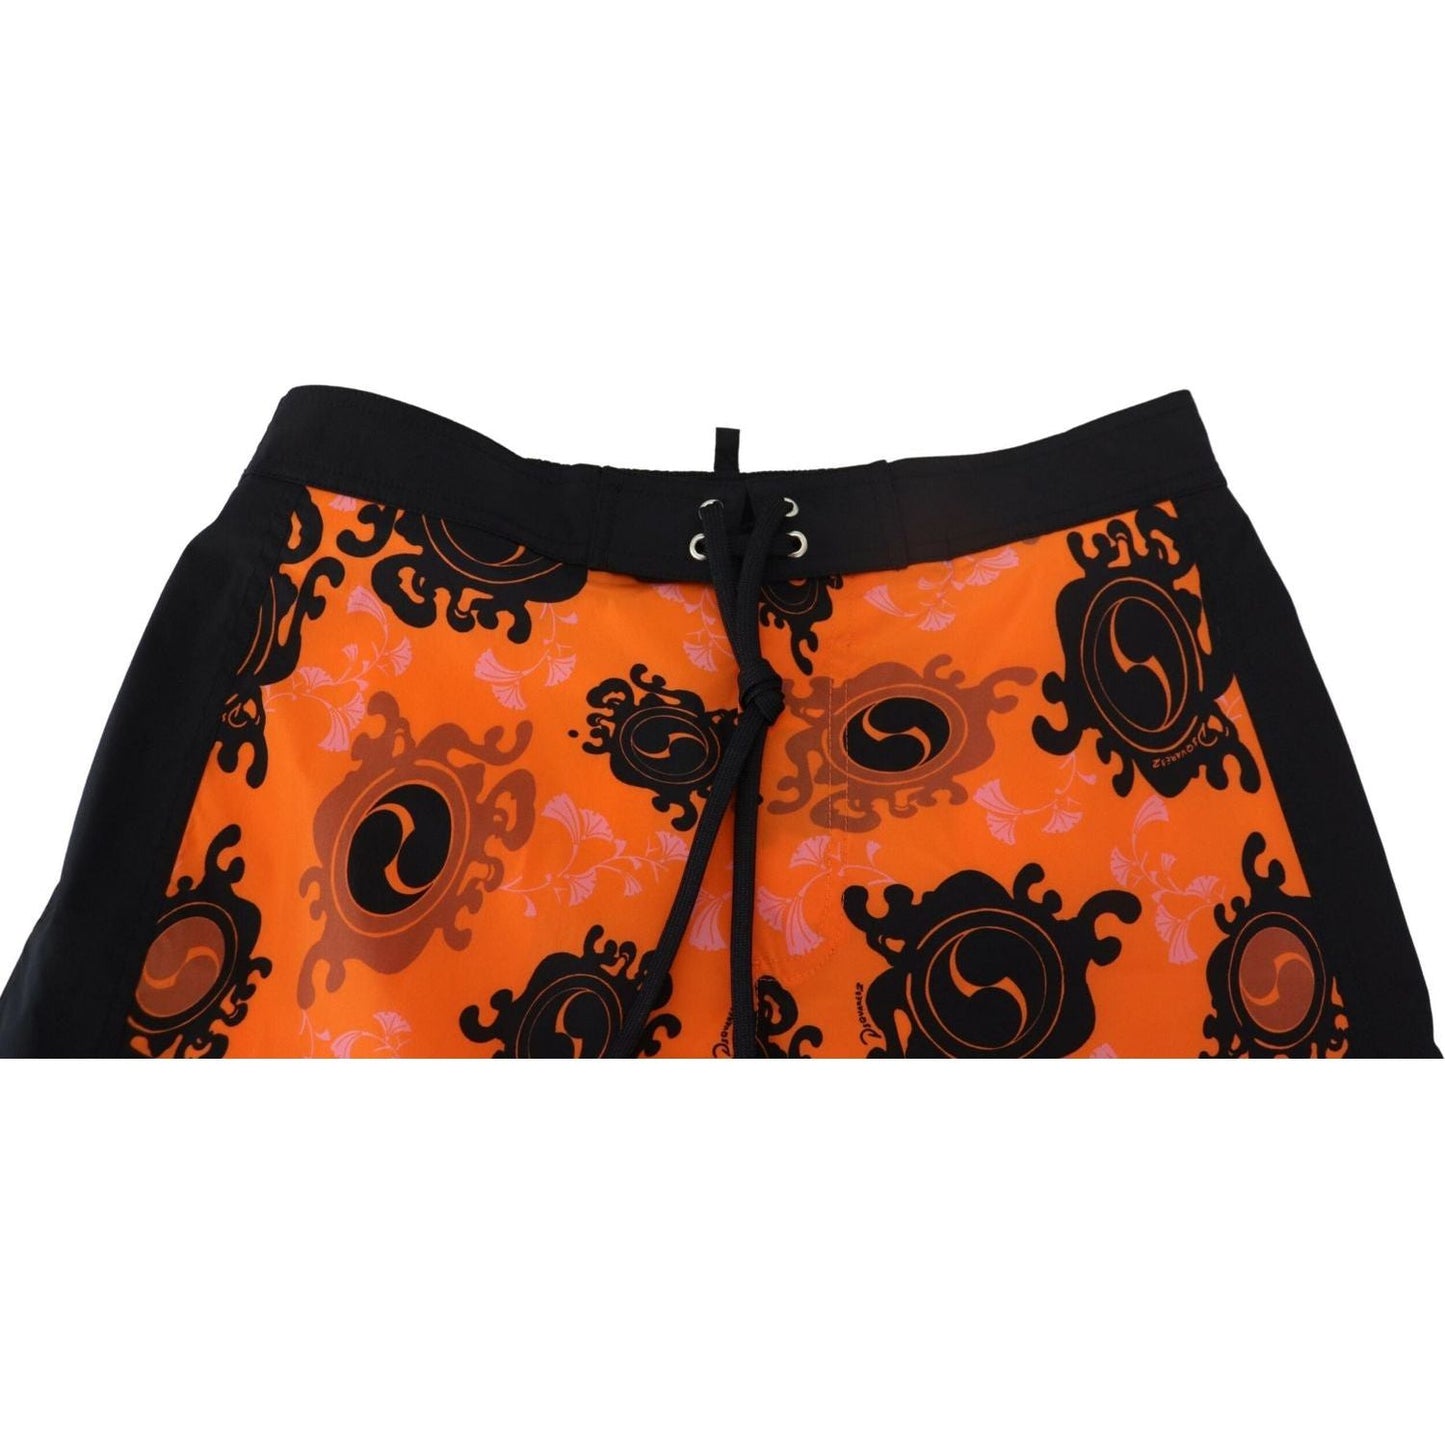 Dsquared² Chic Orange Swim Shorts Boxer for Men orange-black-printed-men-beachwear-shorts-swimwear IMG_6063-scaled-4cf40432-0b5.jpg